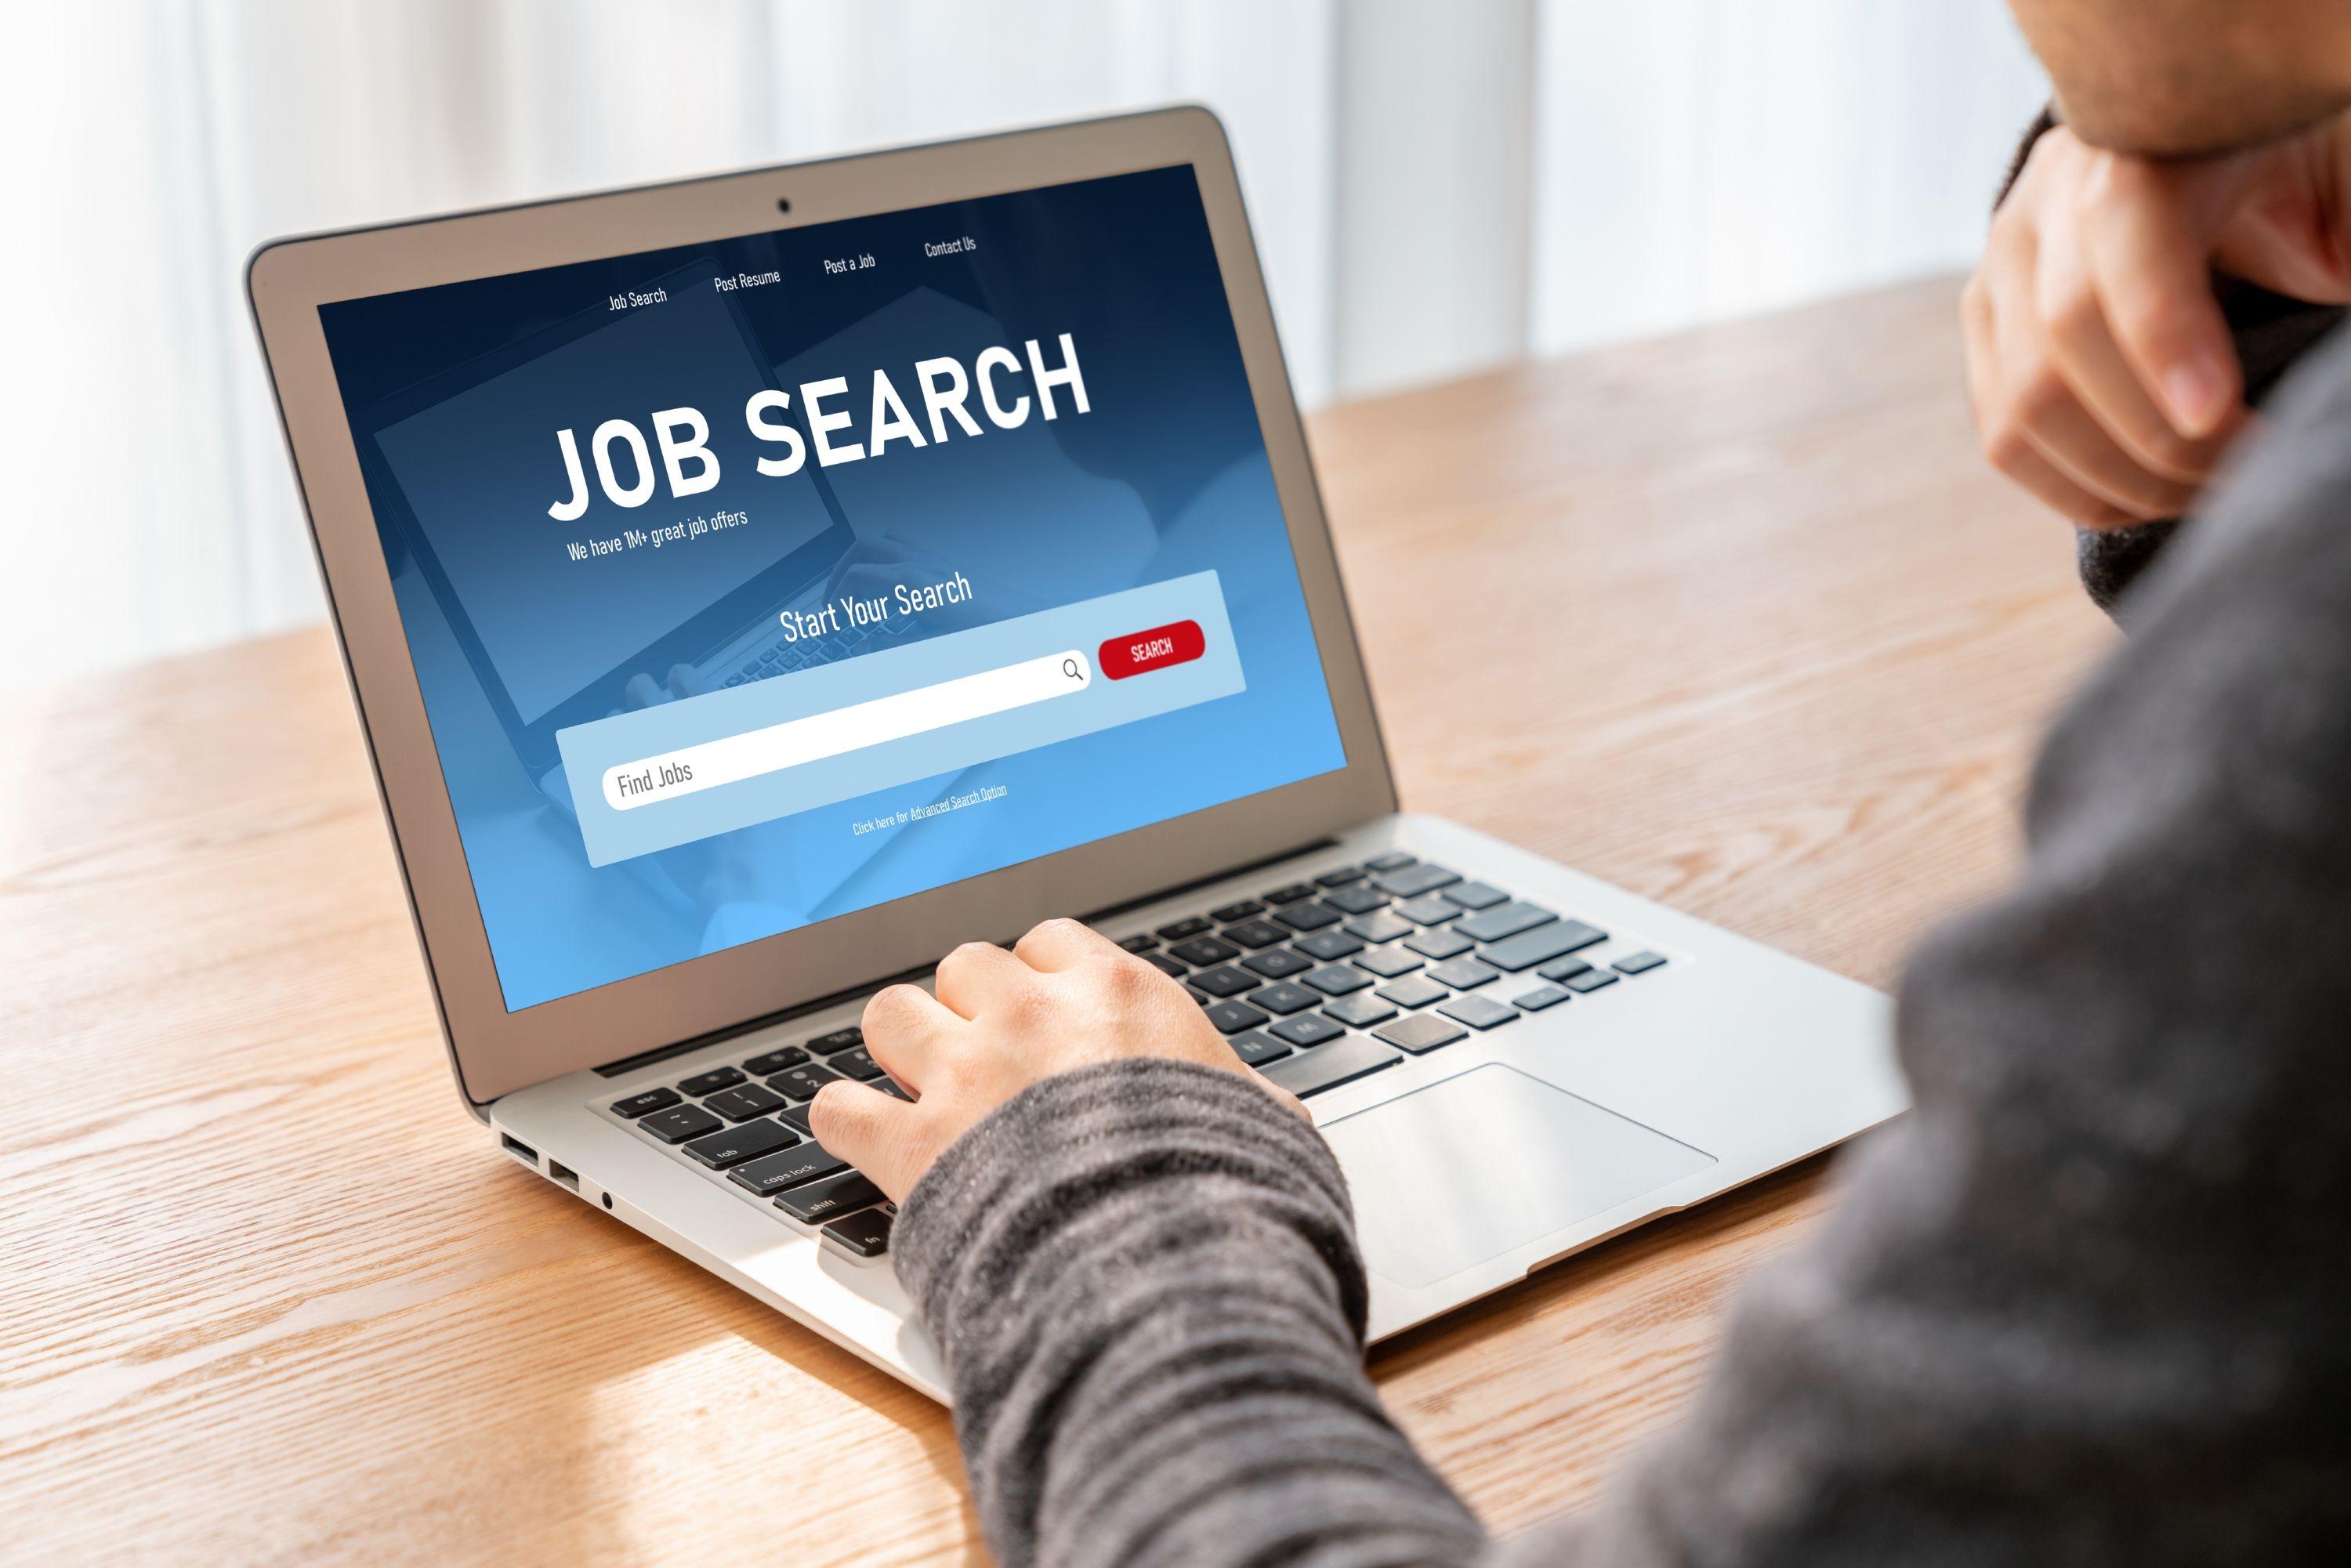 online-job-search-modish-website-worker-search-job-opportunities.jpg